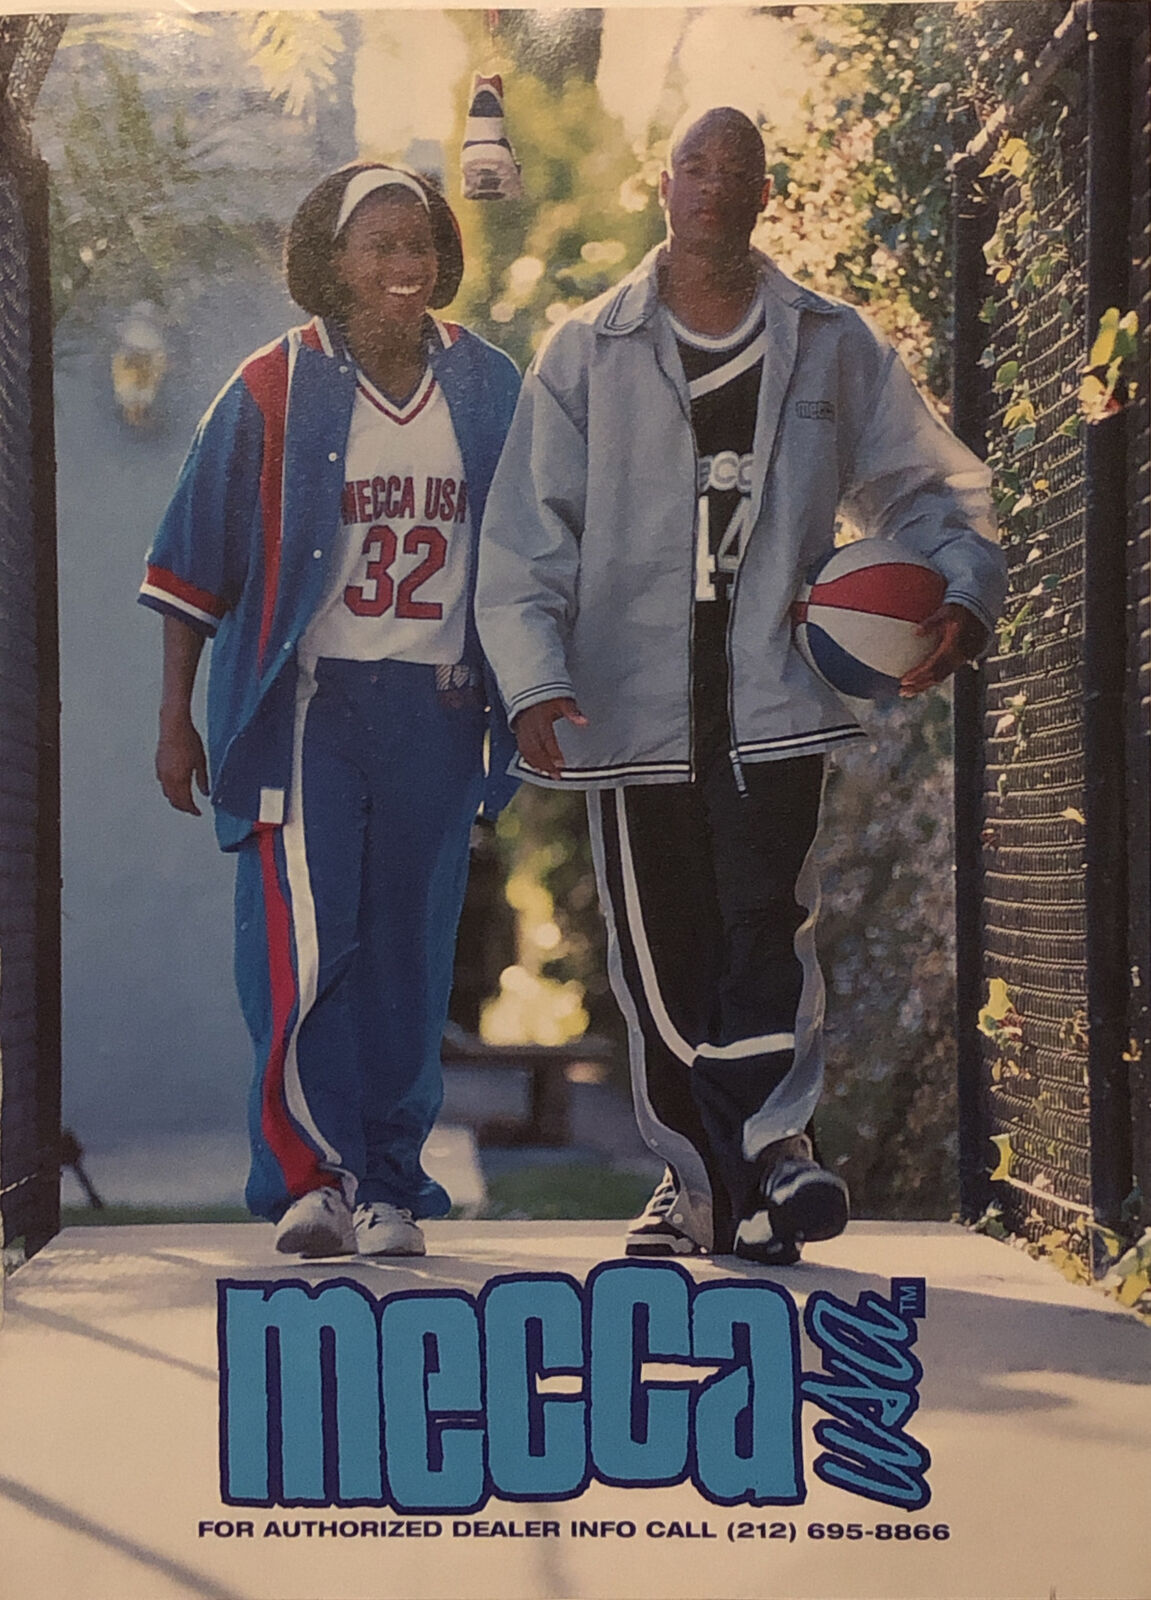 1996 Mecca USA Sportswear Basketball Clothing VTG 1990s PRINT AD